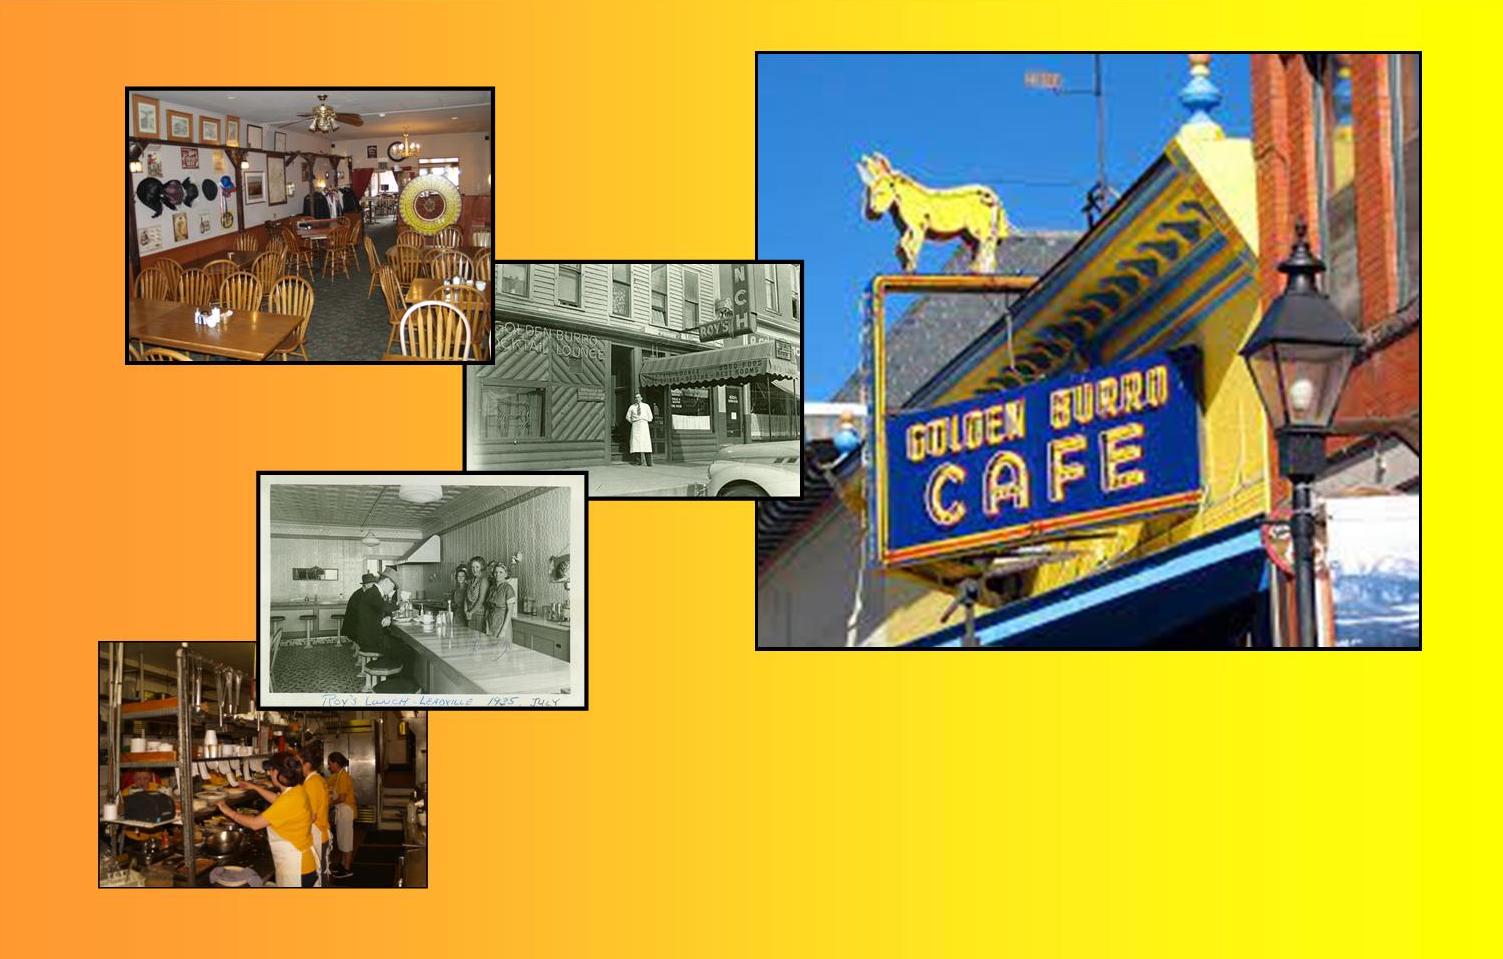 Golden Burro Cafe Image